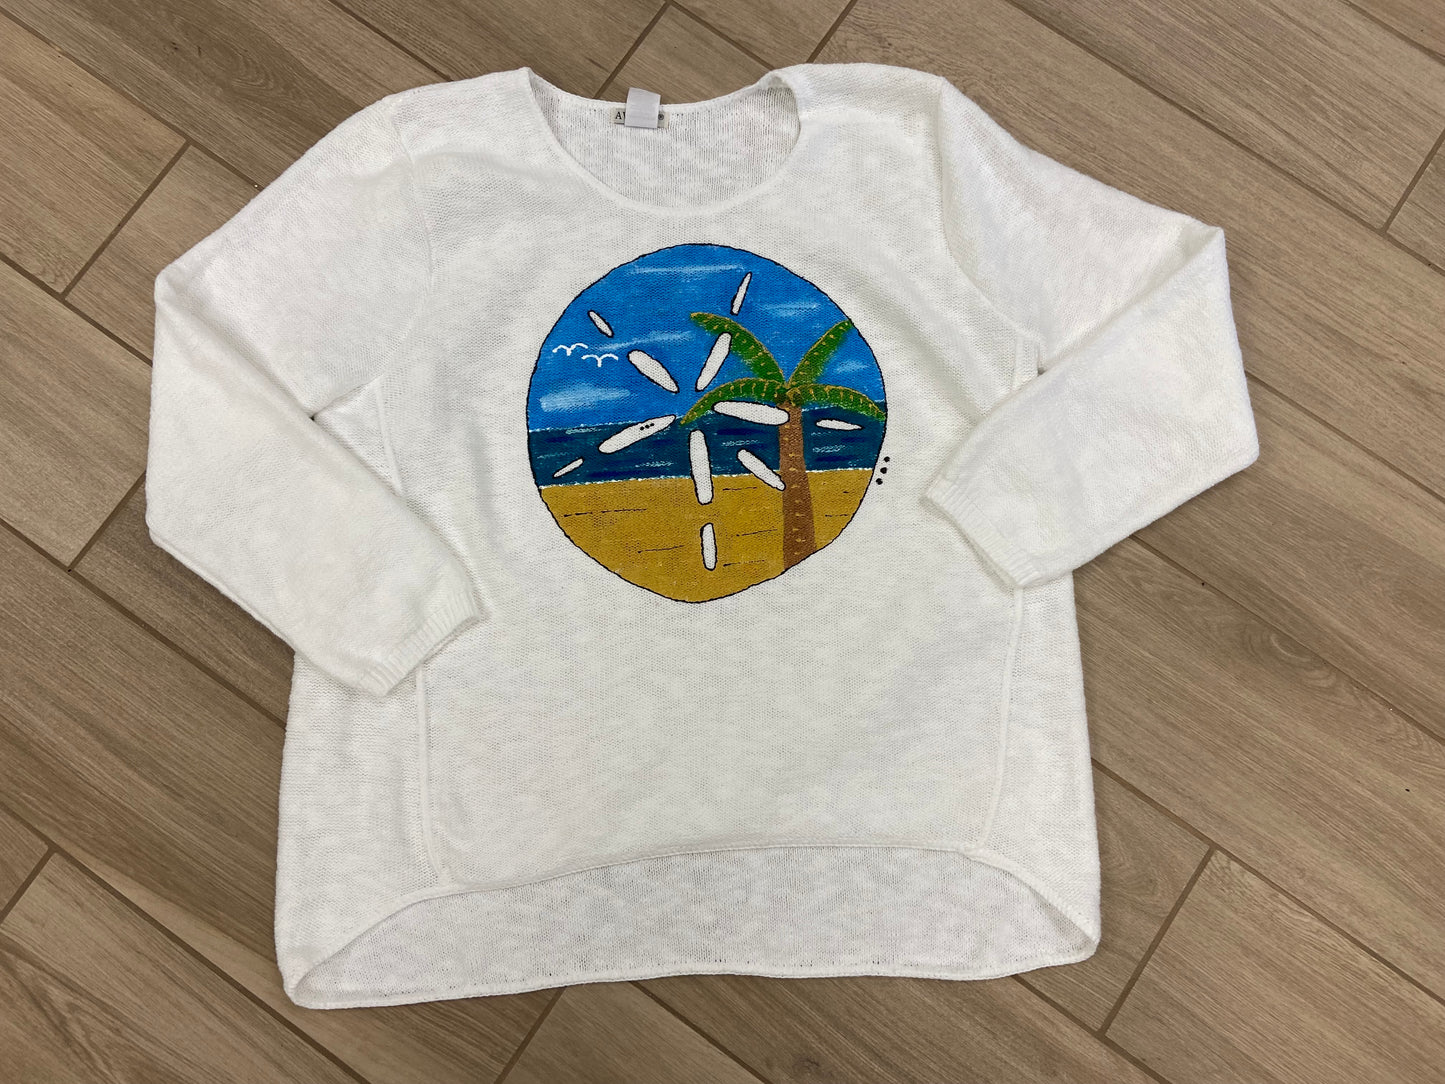 MoMo Sweater - Sand Dollar